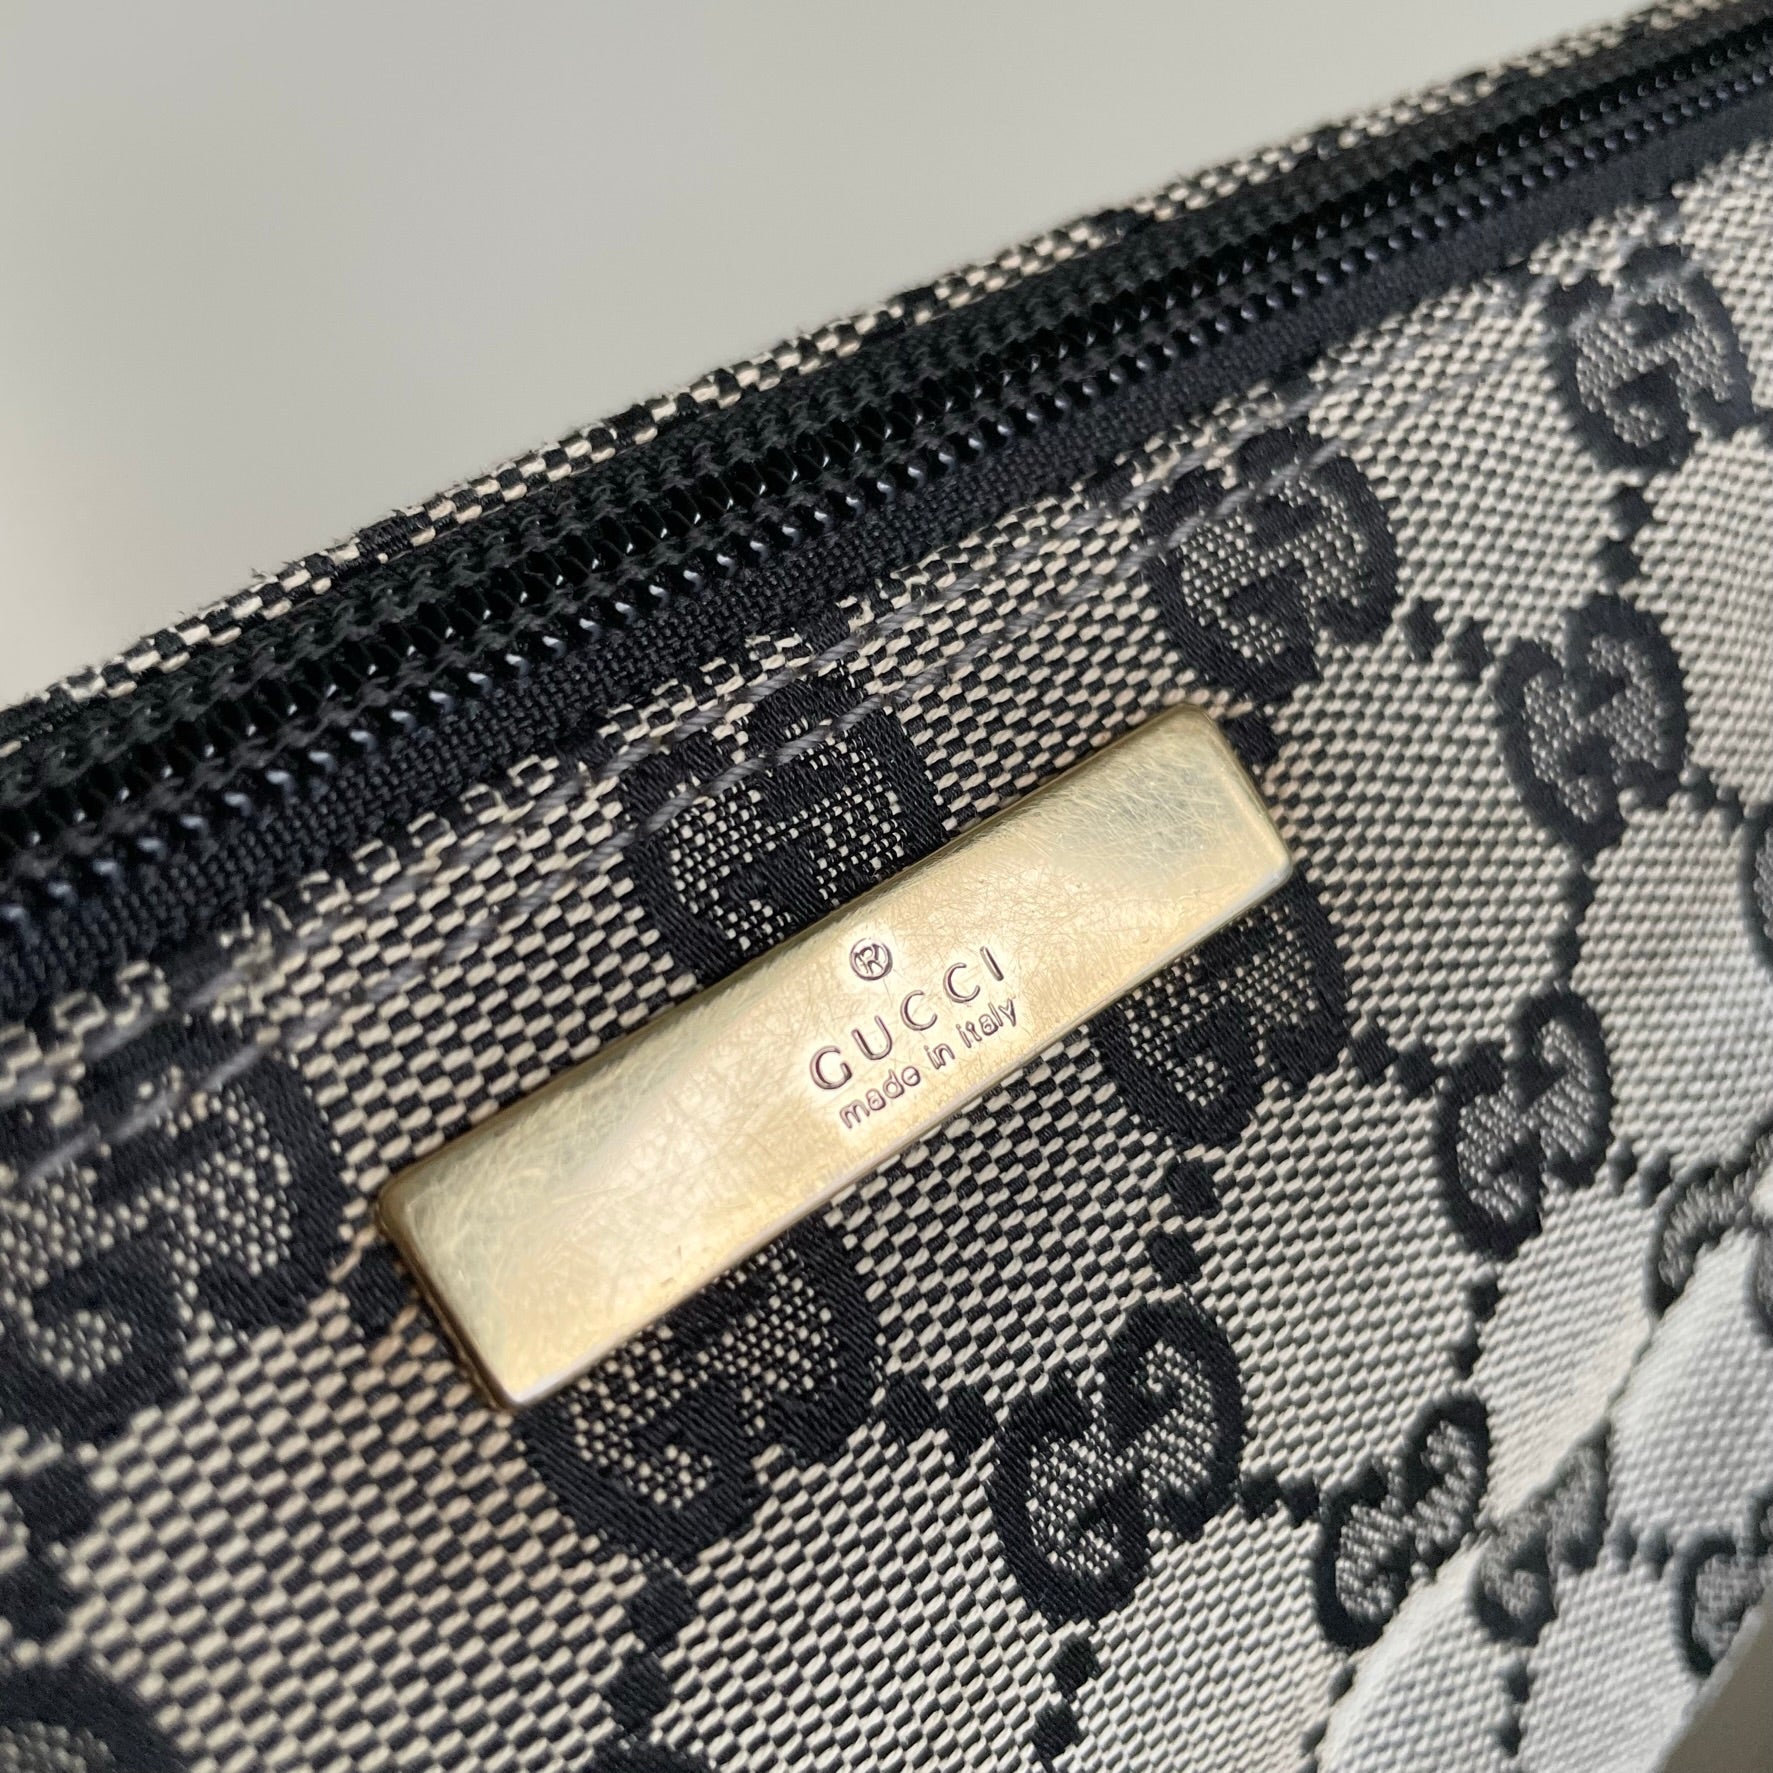 Gucci pochette bag - Gem